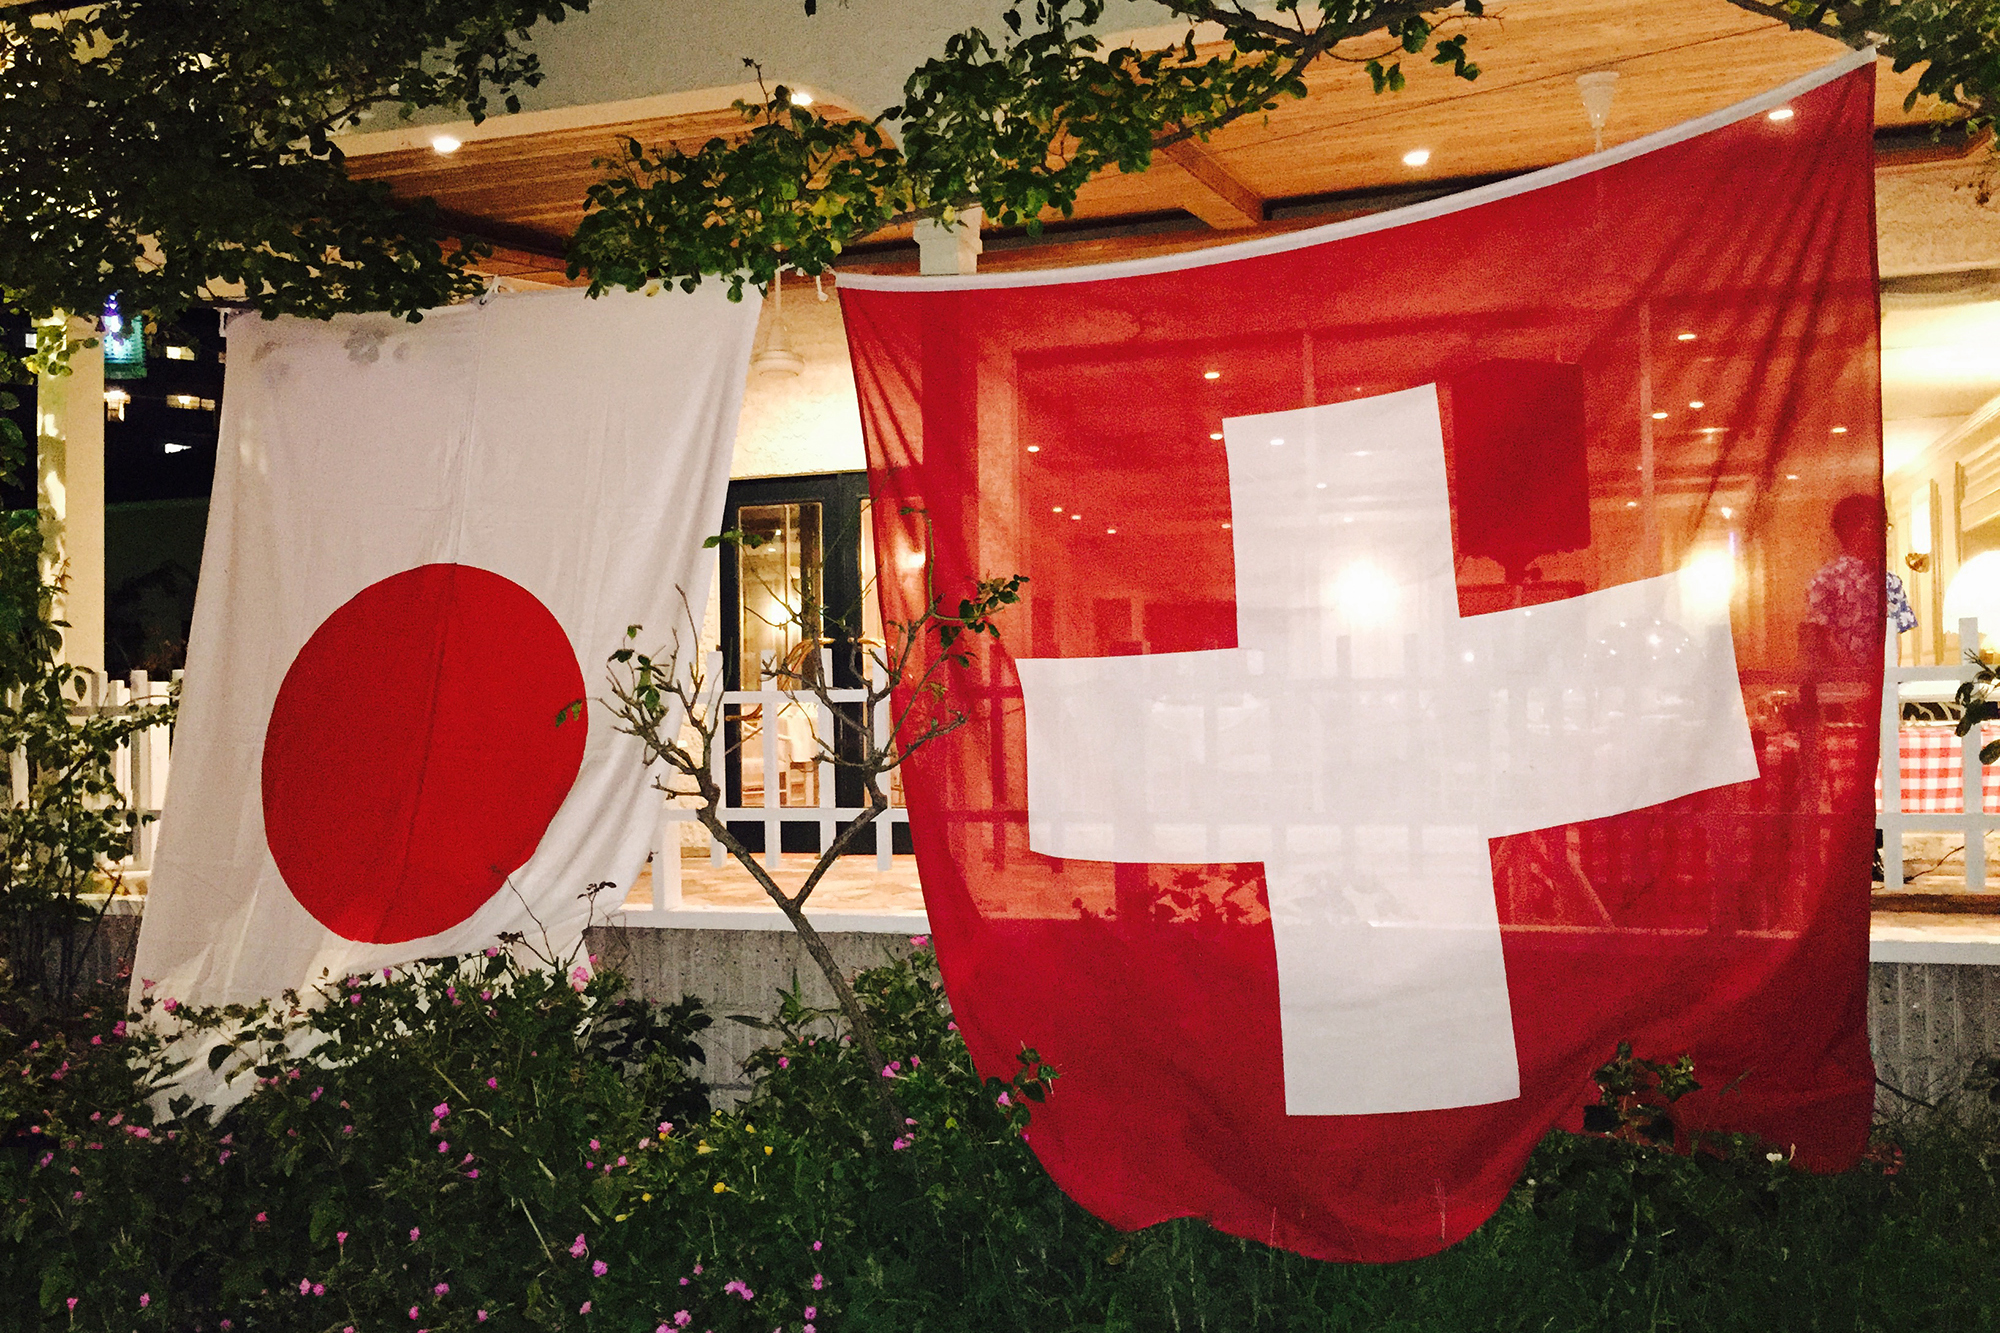 Swiss Society of the Kansai